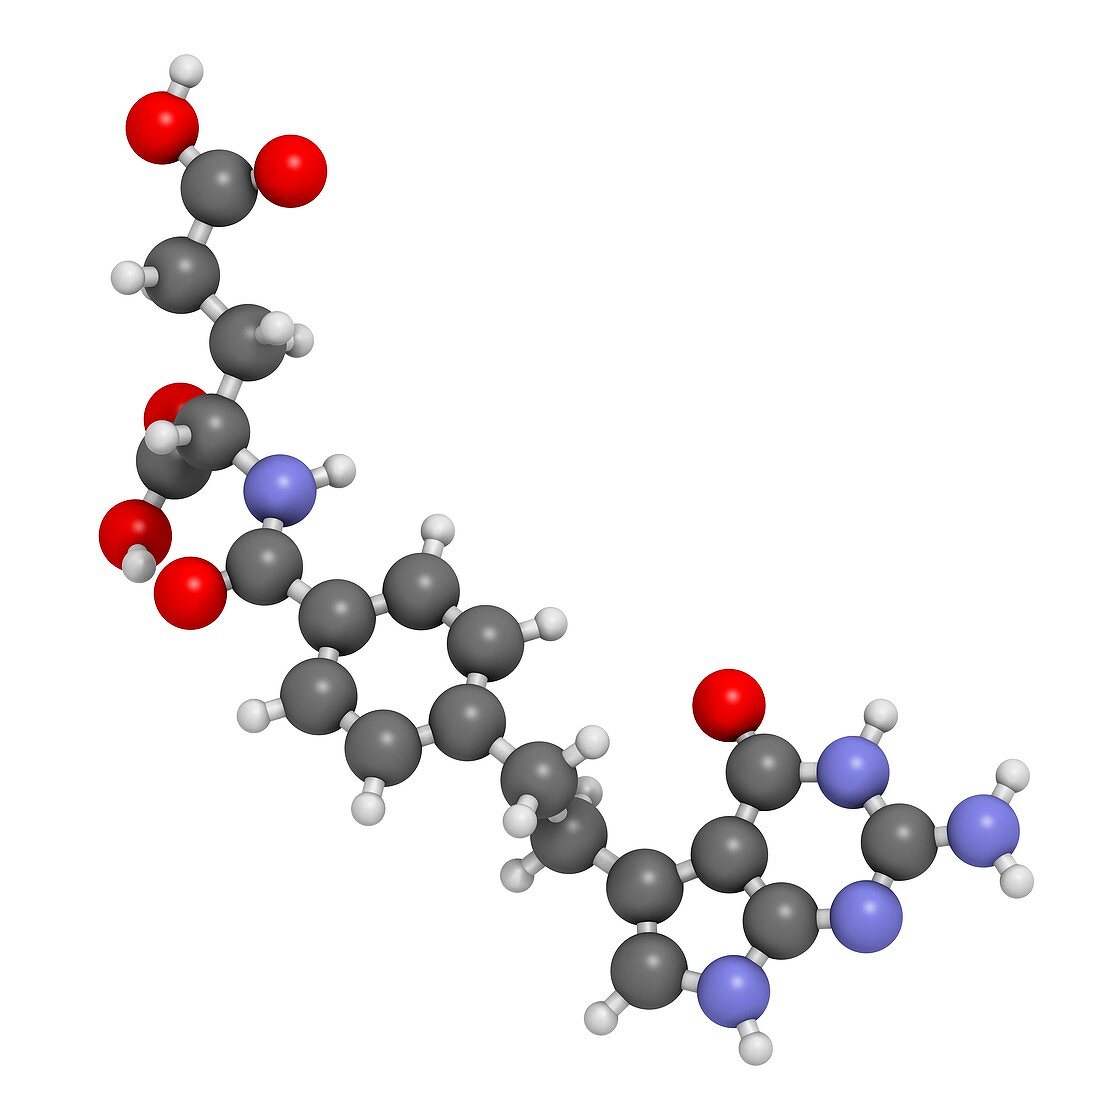 Pemetrexed lung cancer drug molecule